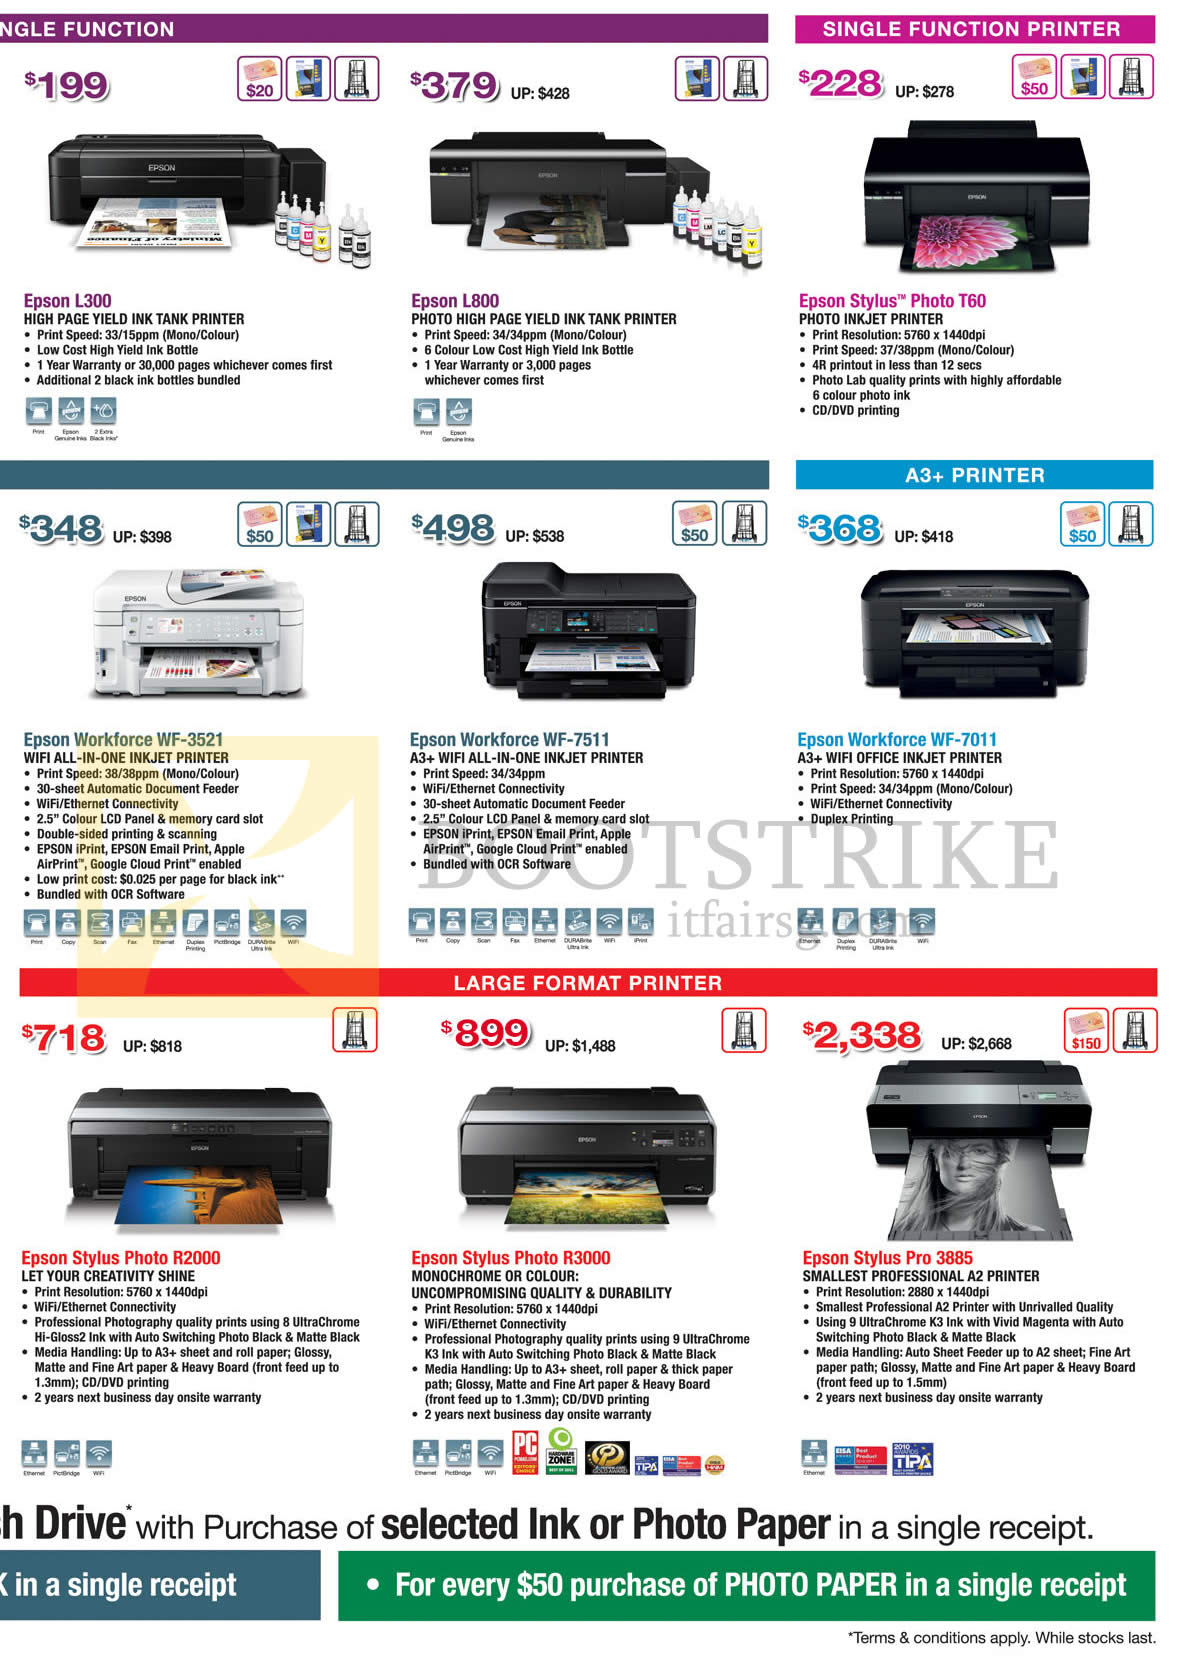 epson stylus photo r3000 inkjet printer cost per page